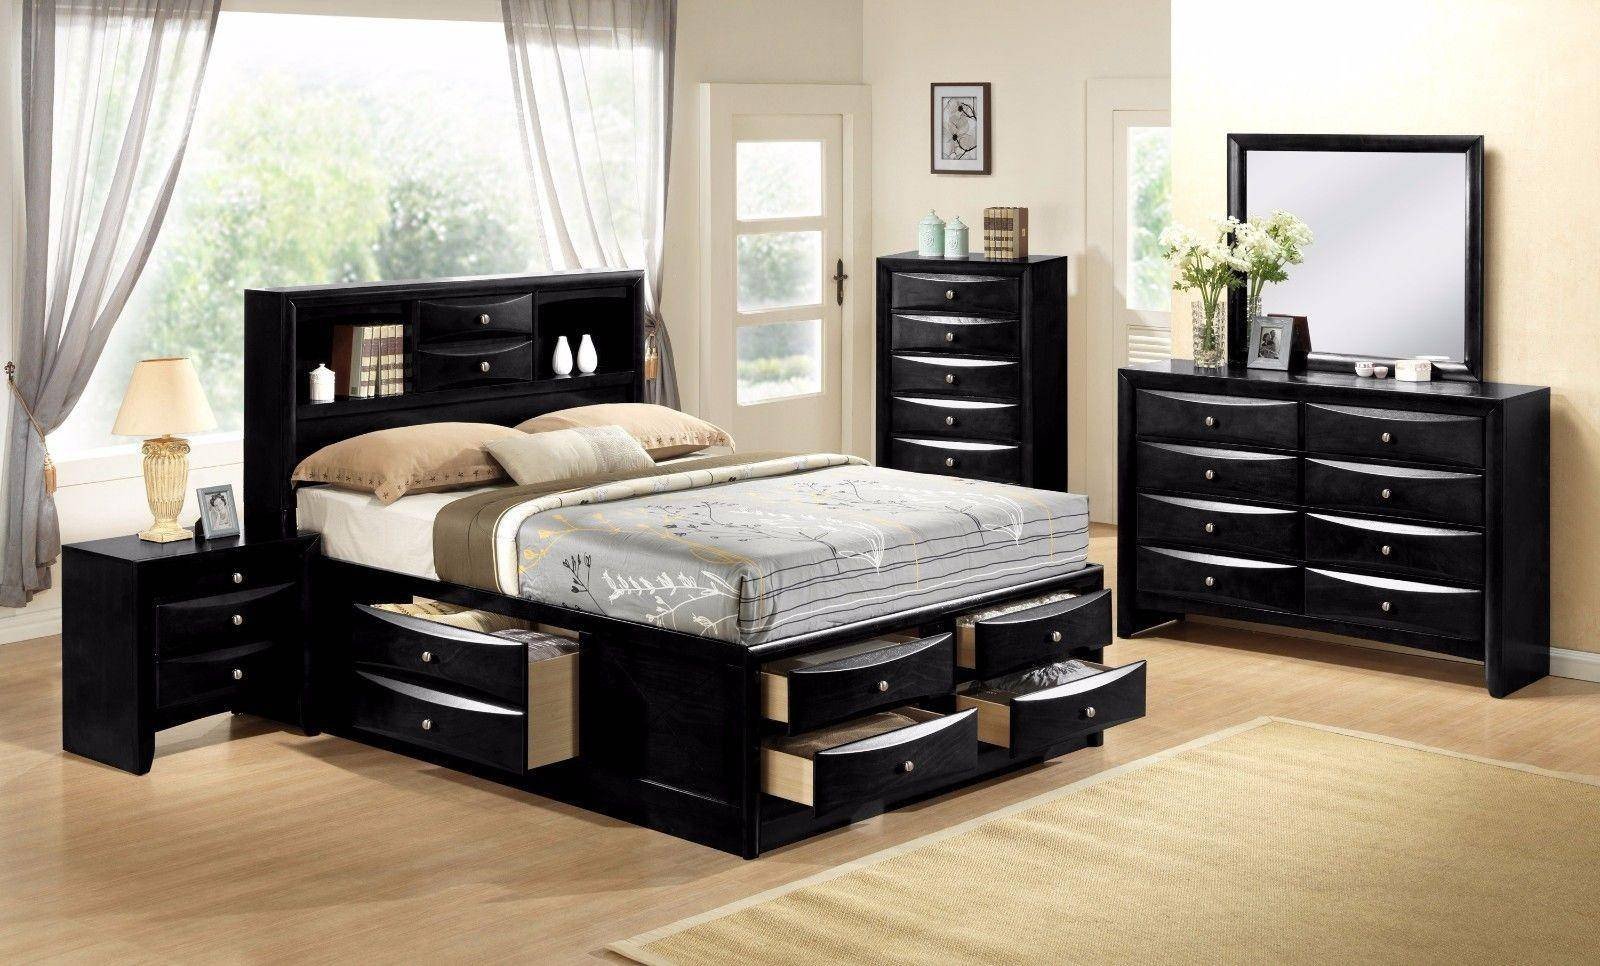 Bedroom Furniture Set King Best Of Crown Mark B4285 Emily Modern Black Finish Storage King Size